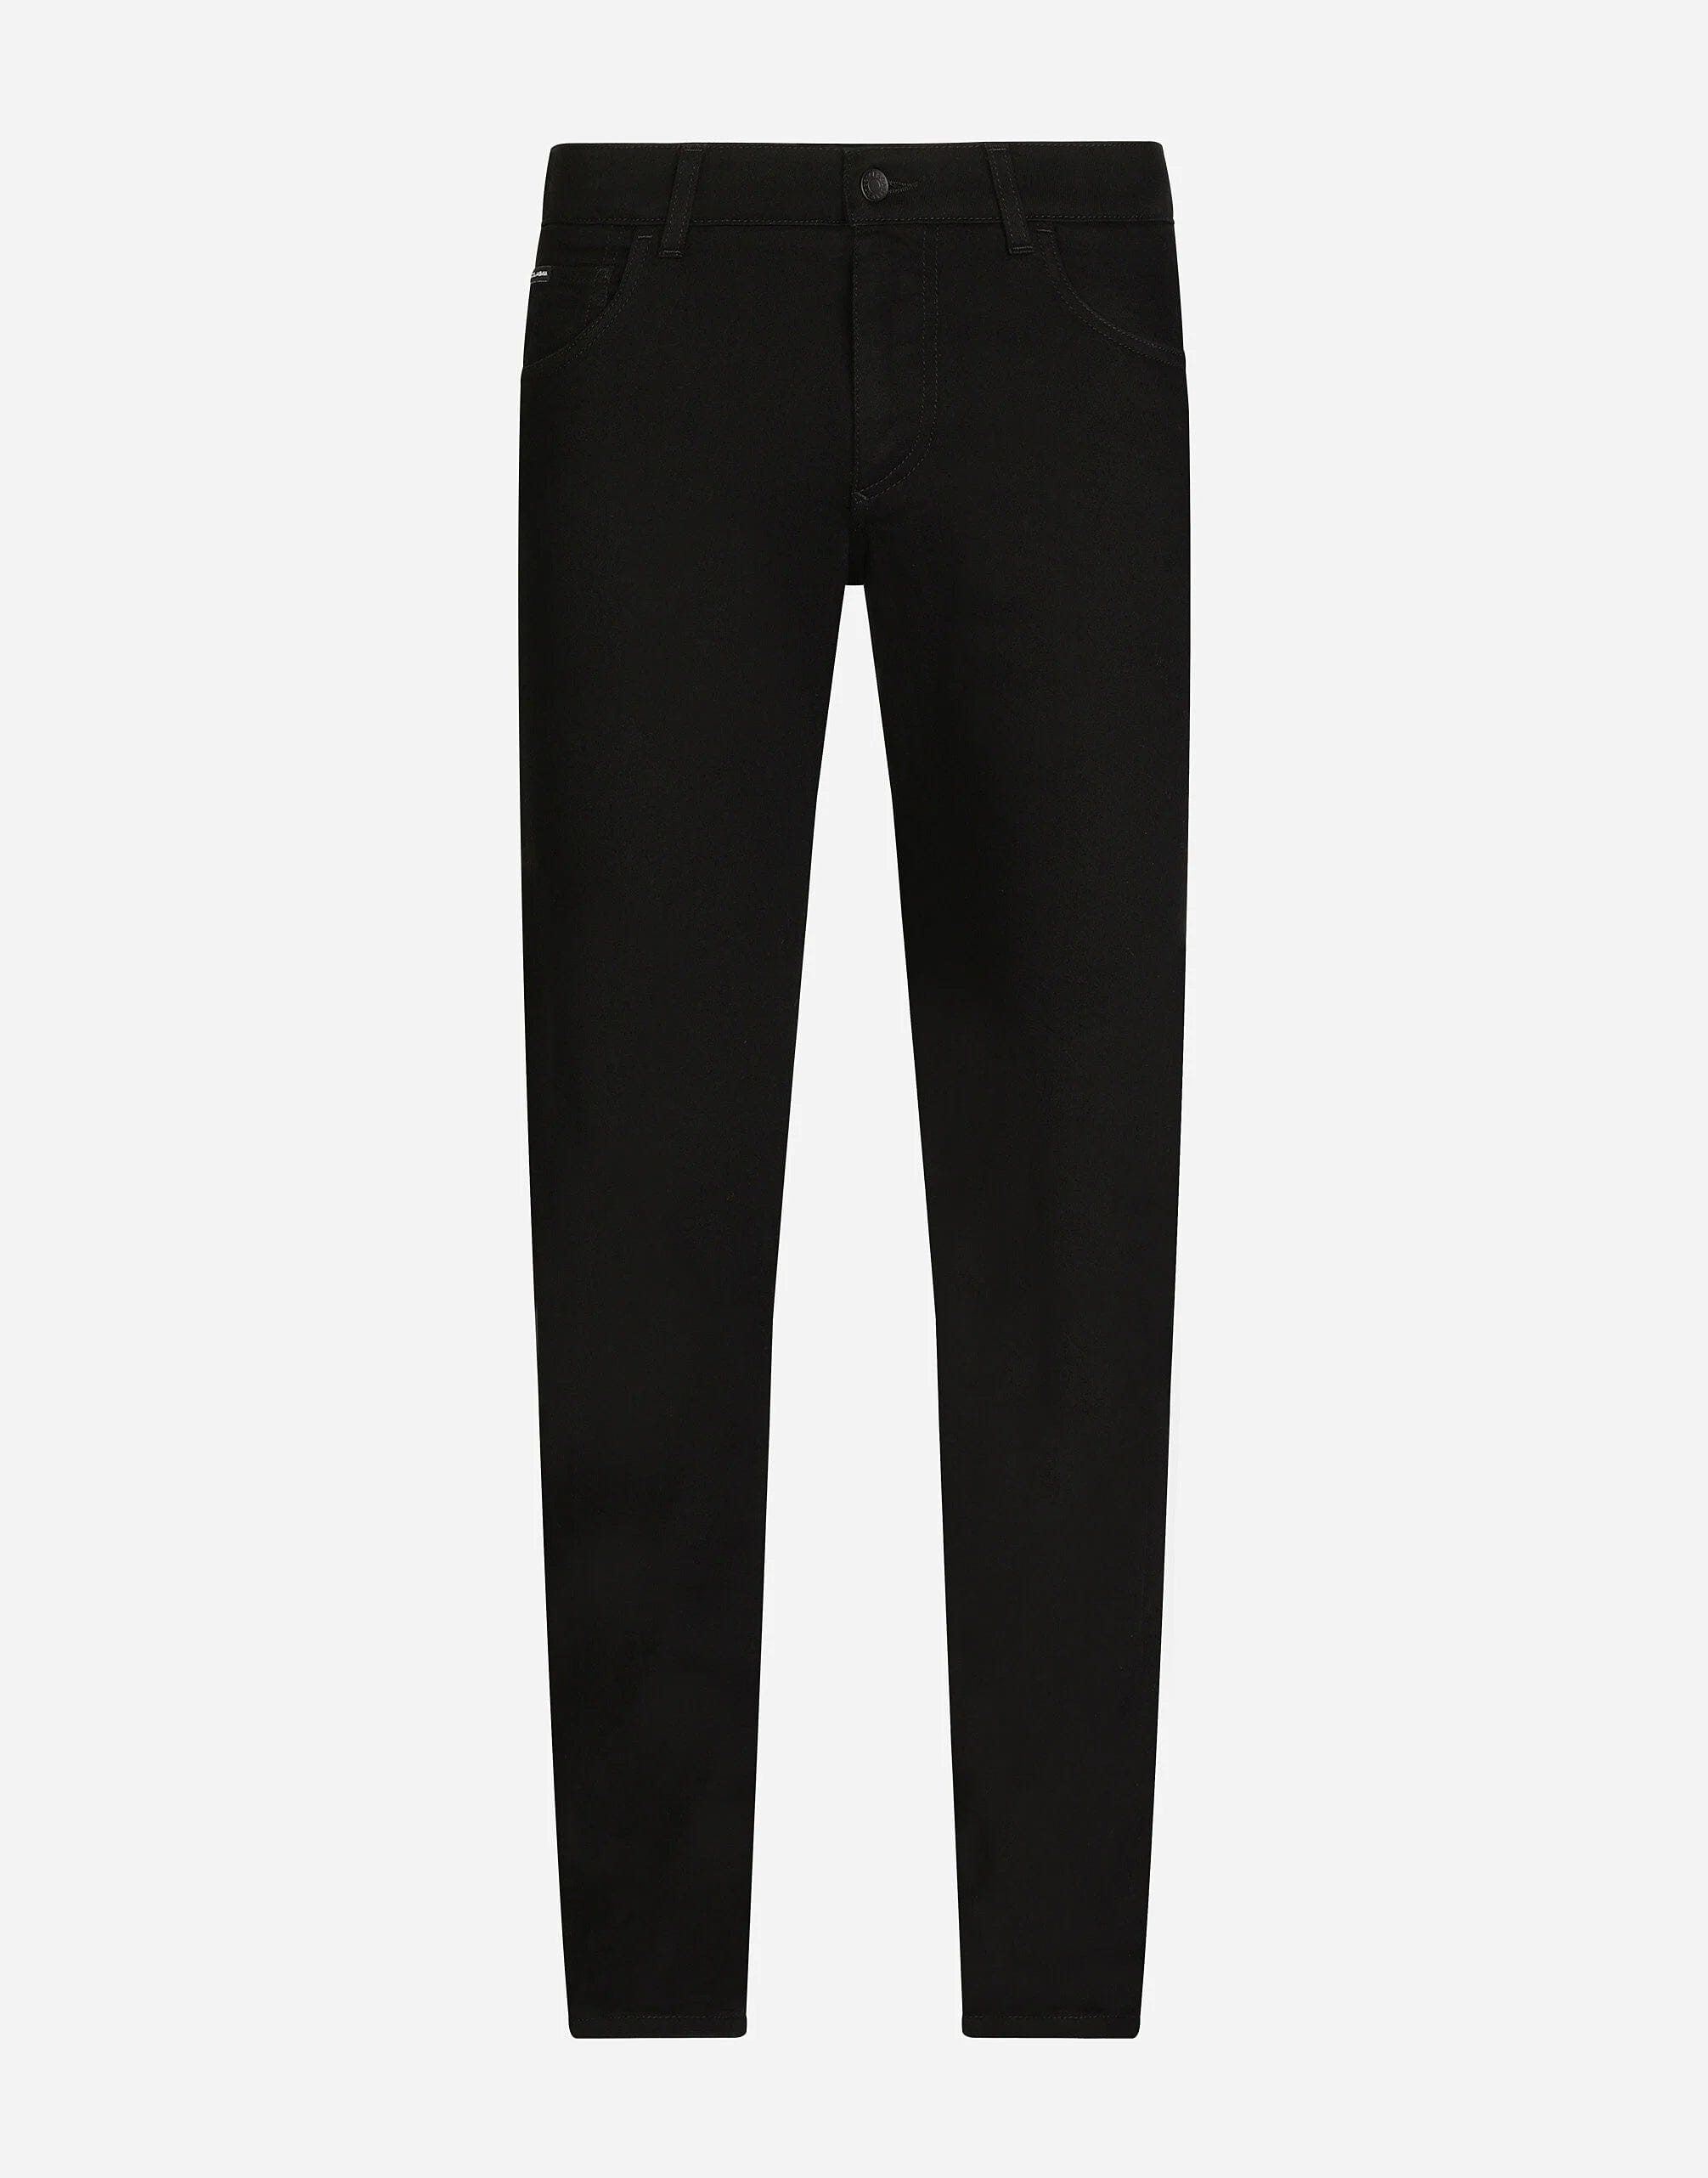 Dolce & Gabbana Black Slim-Fit Stretch Jeans